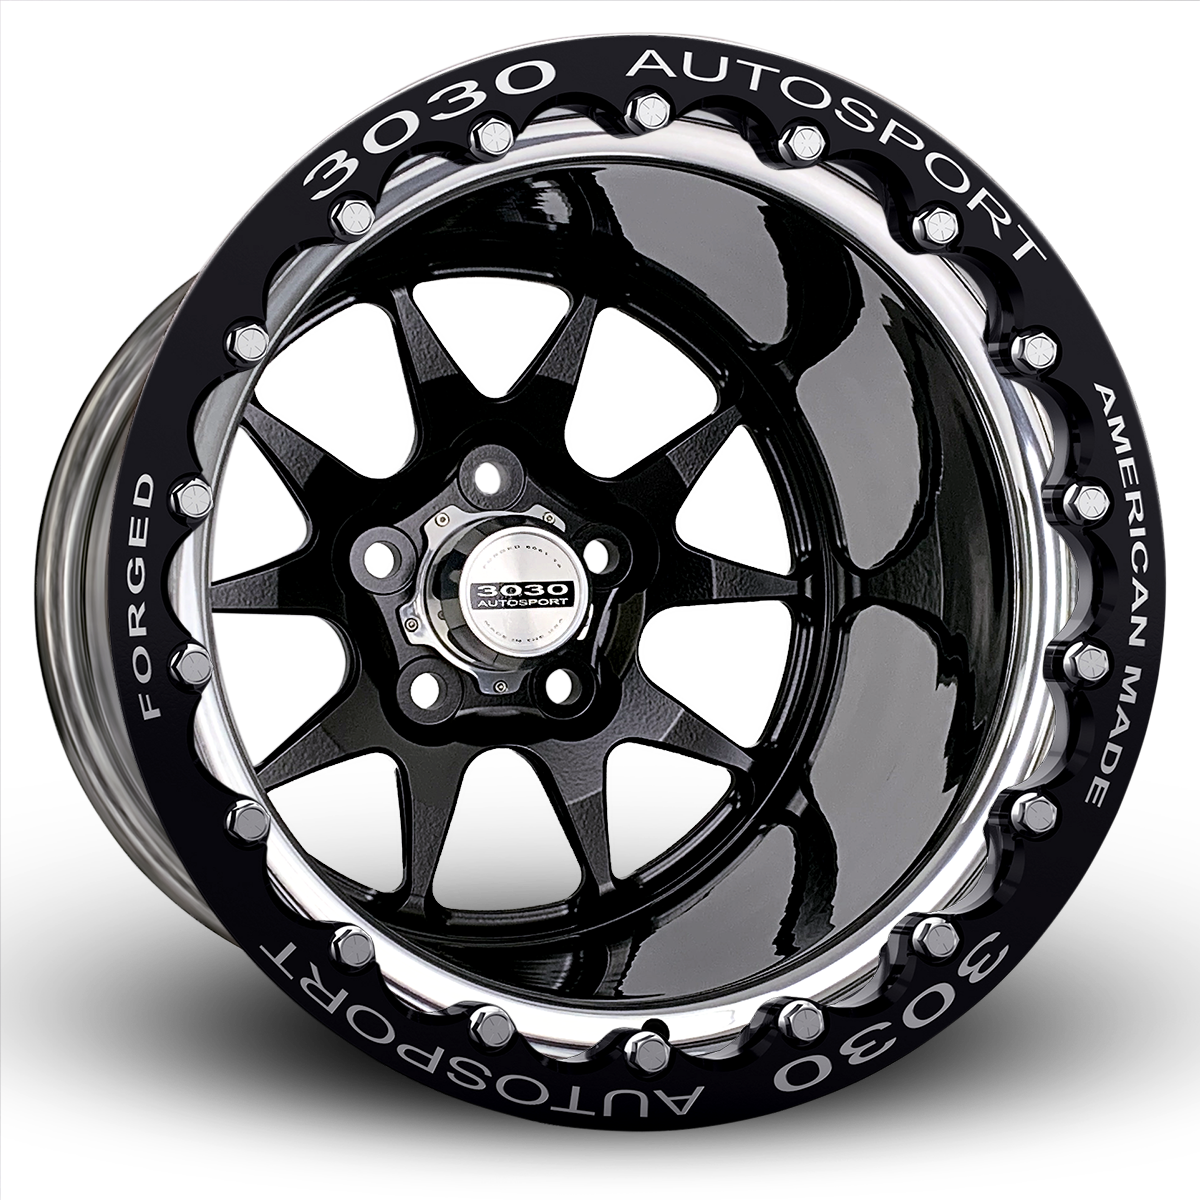 MACH-10 Double-Beadlock Wheel, Size: 15x12", Bolt Pattern: 5x4.75", Backspace: 7" [Black/Polished]